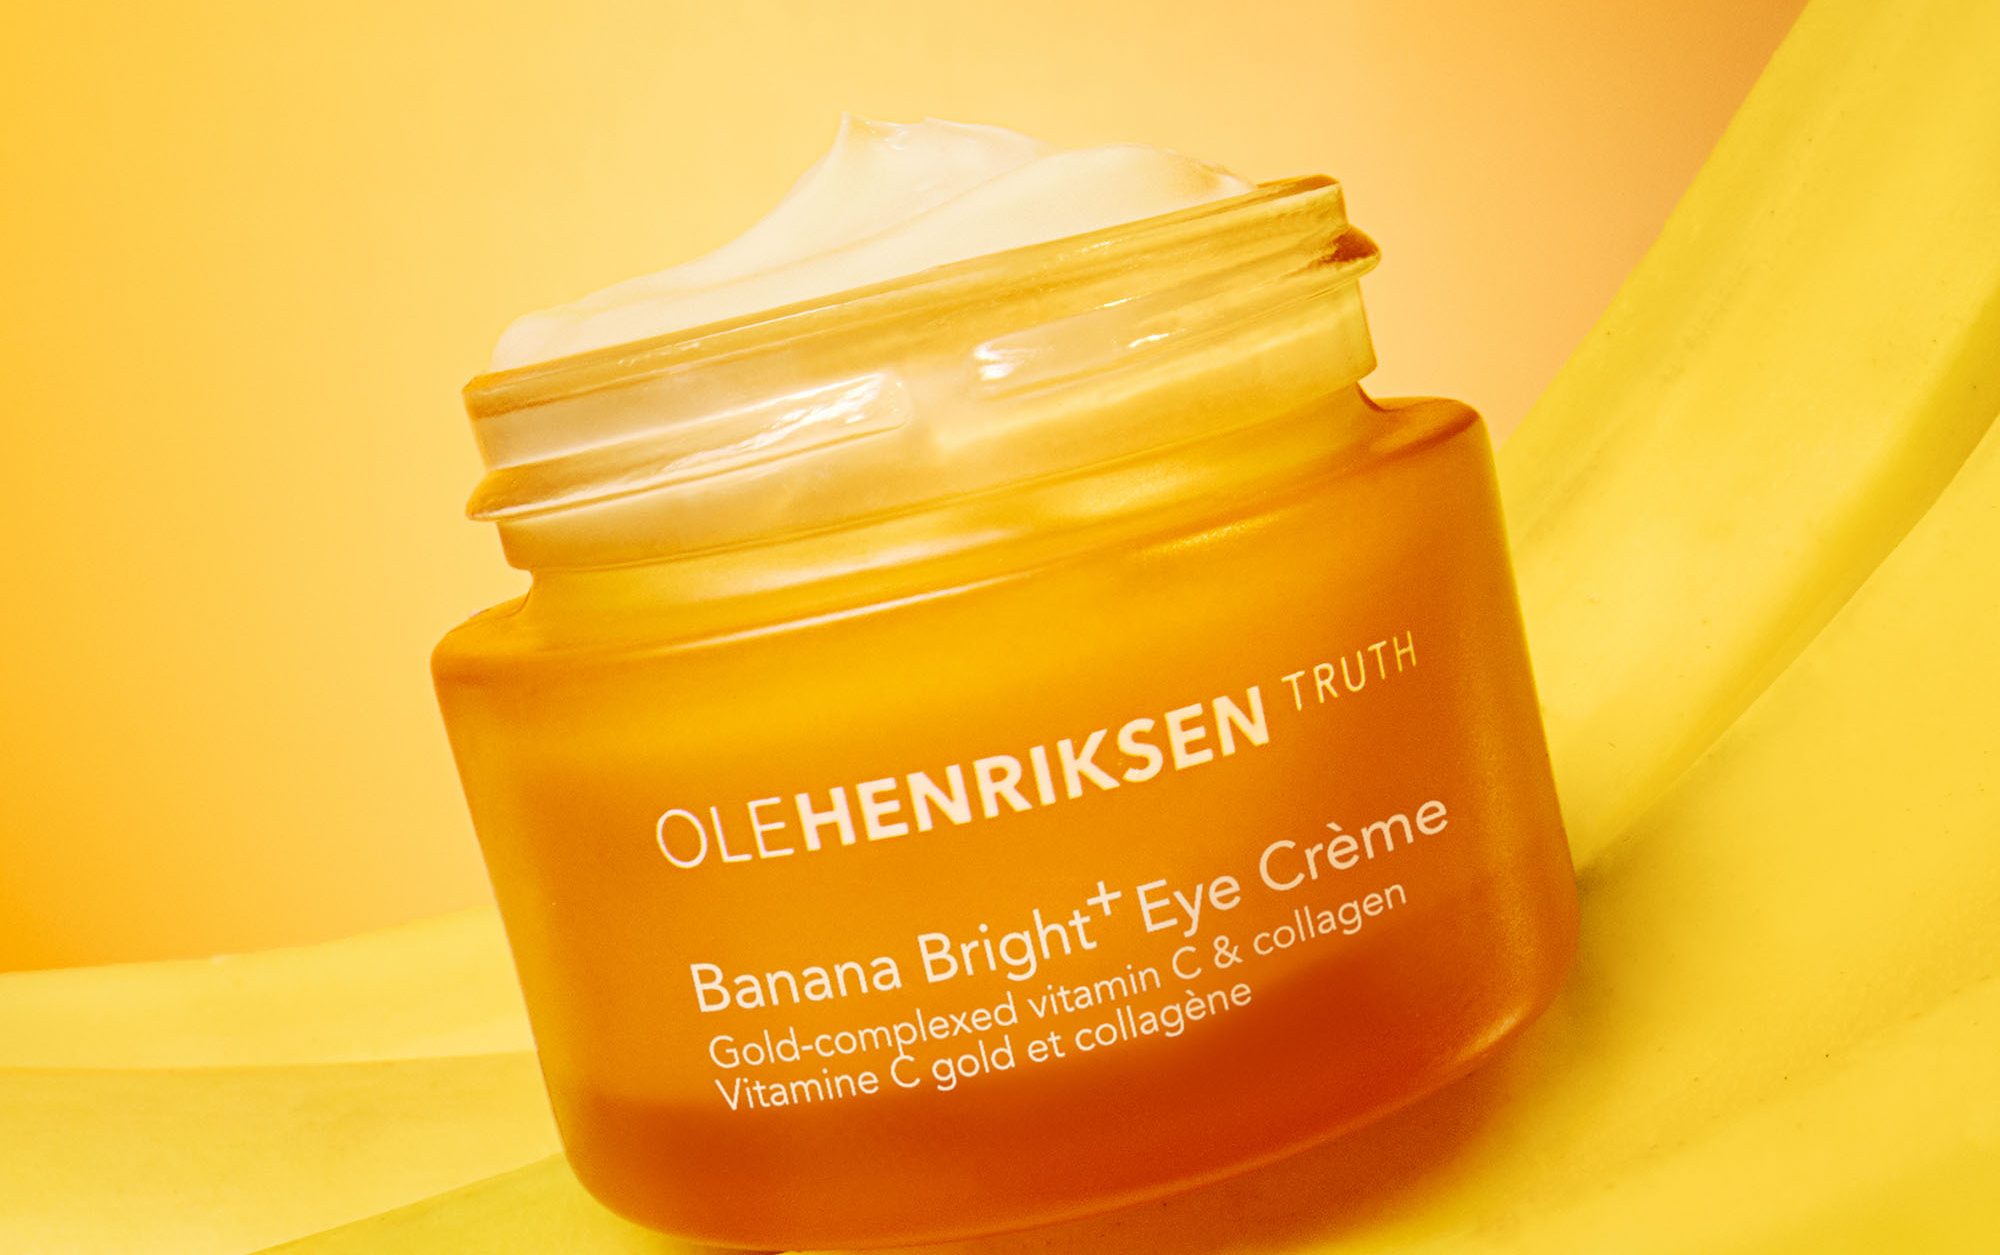 Ole Henriksen's Banana Bright Eye Crème Has a New Vegan Formula